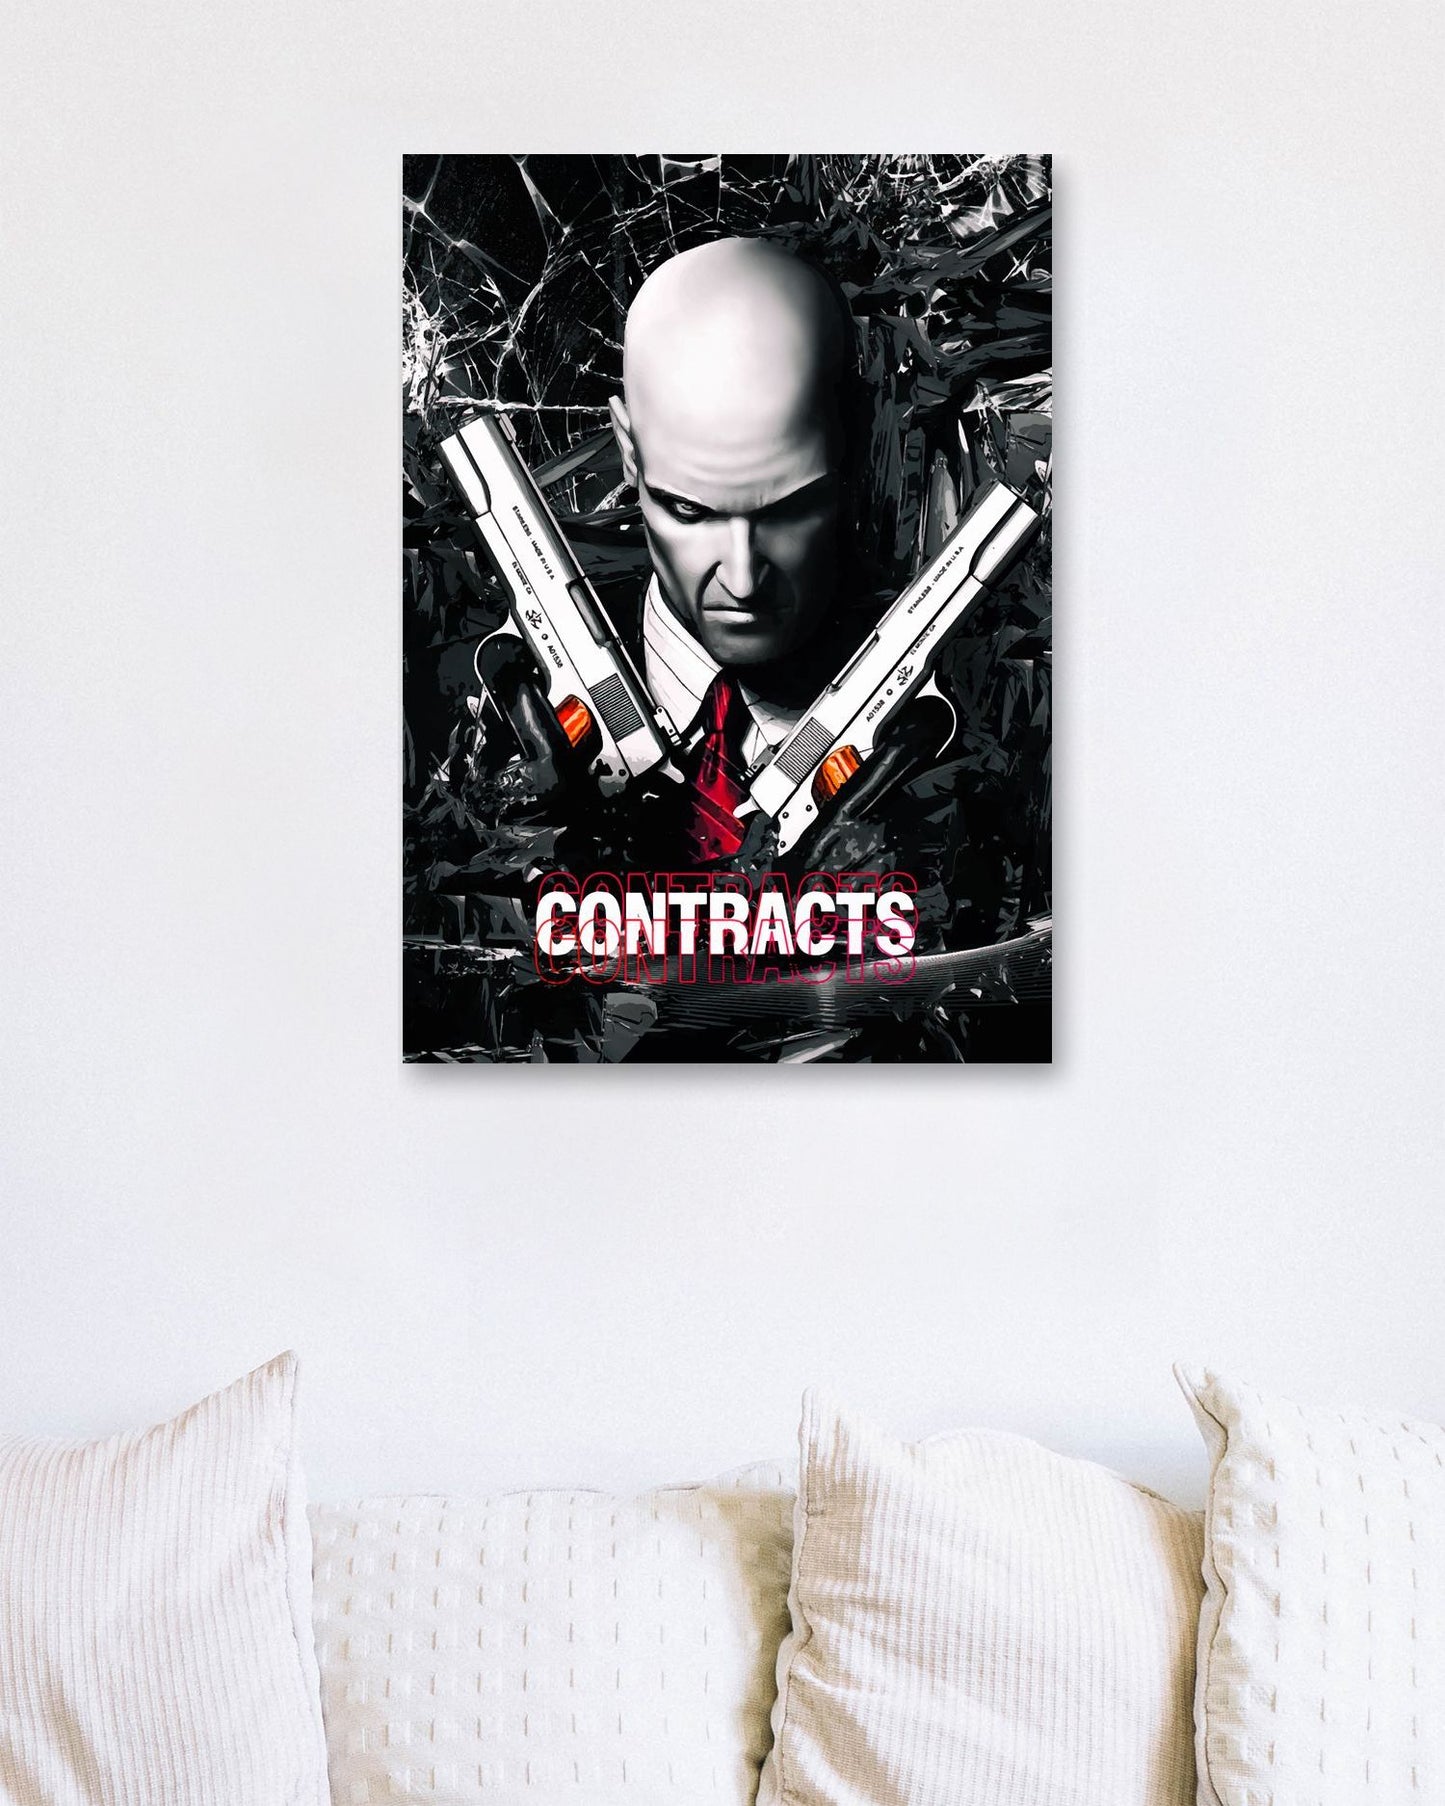 Hitman contracts ultimate cover art - @SyanArt